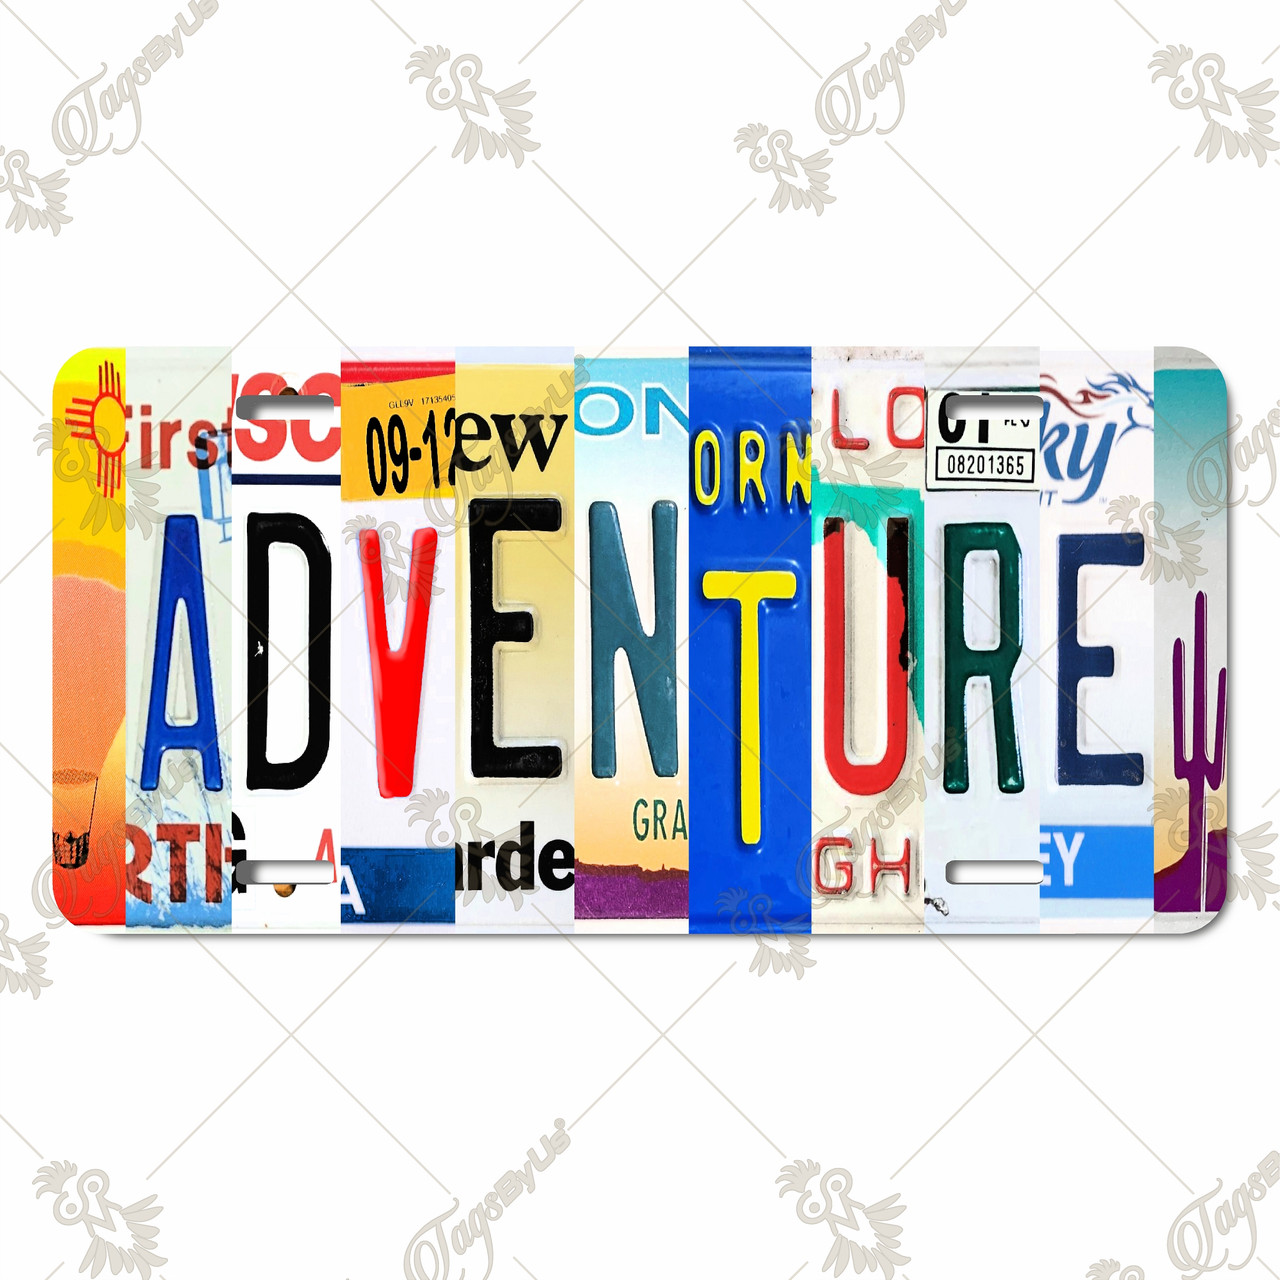 Adventure Letter Art License Plate - Car Tag